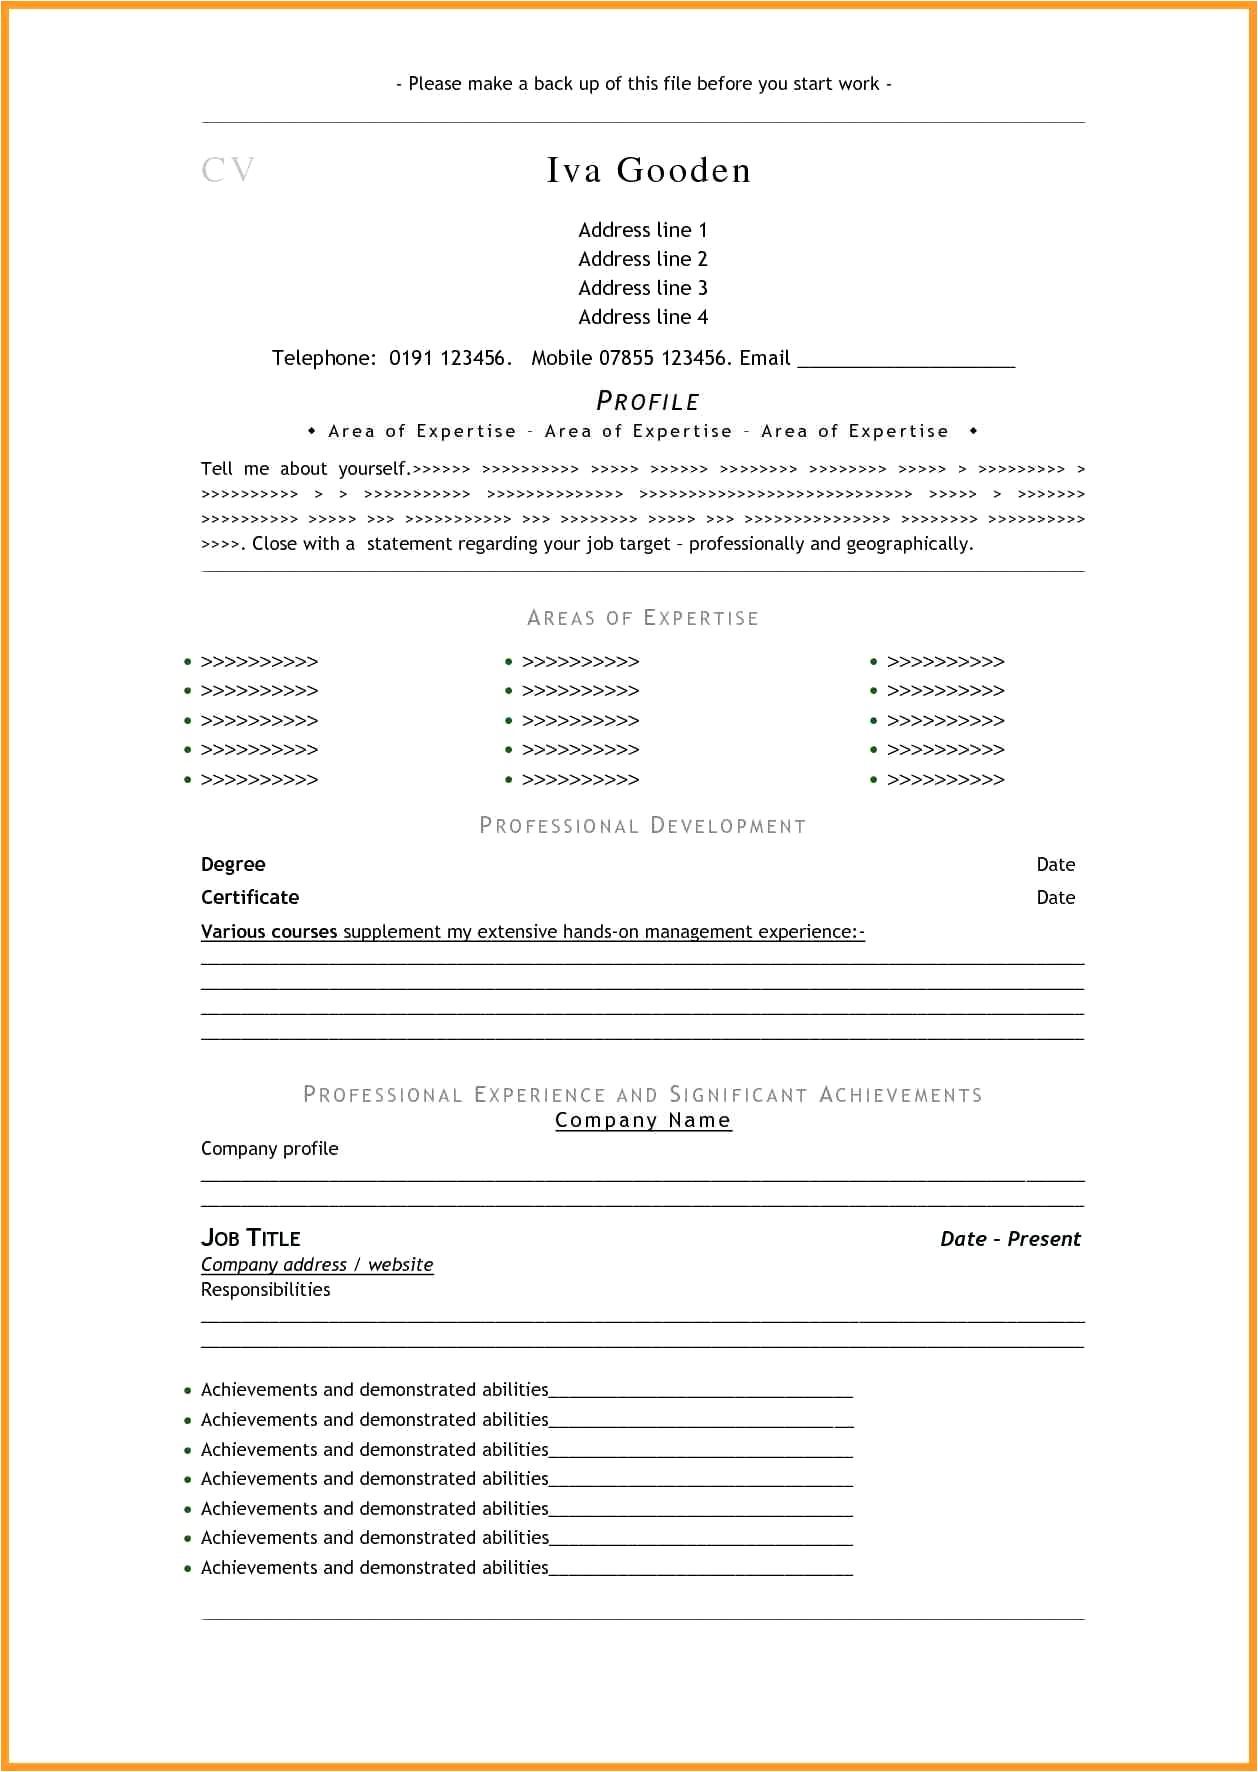 Word Document Resume Template Free 13 Beautiful Sample Resume Word Document Free Download